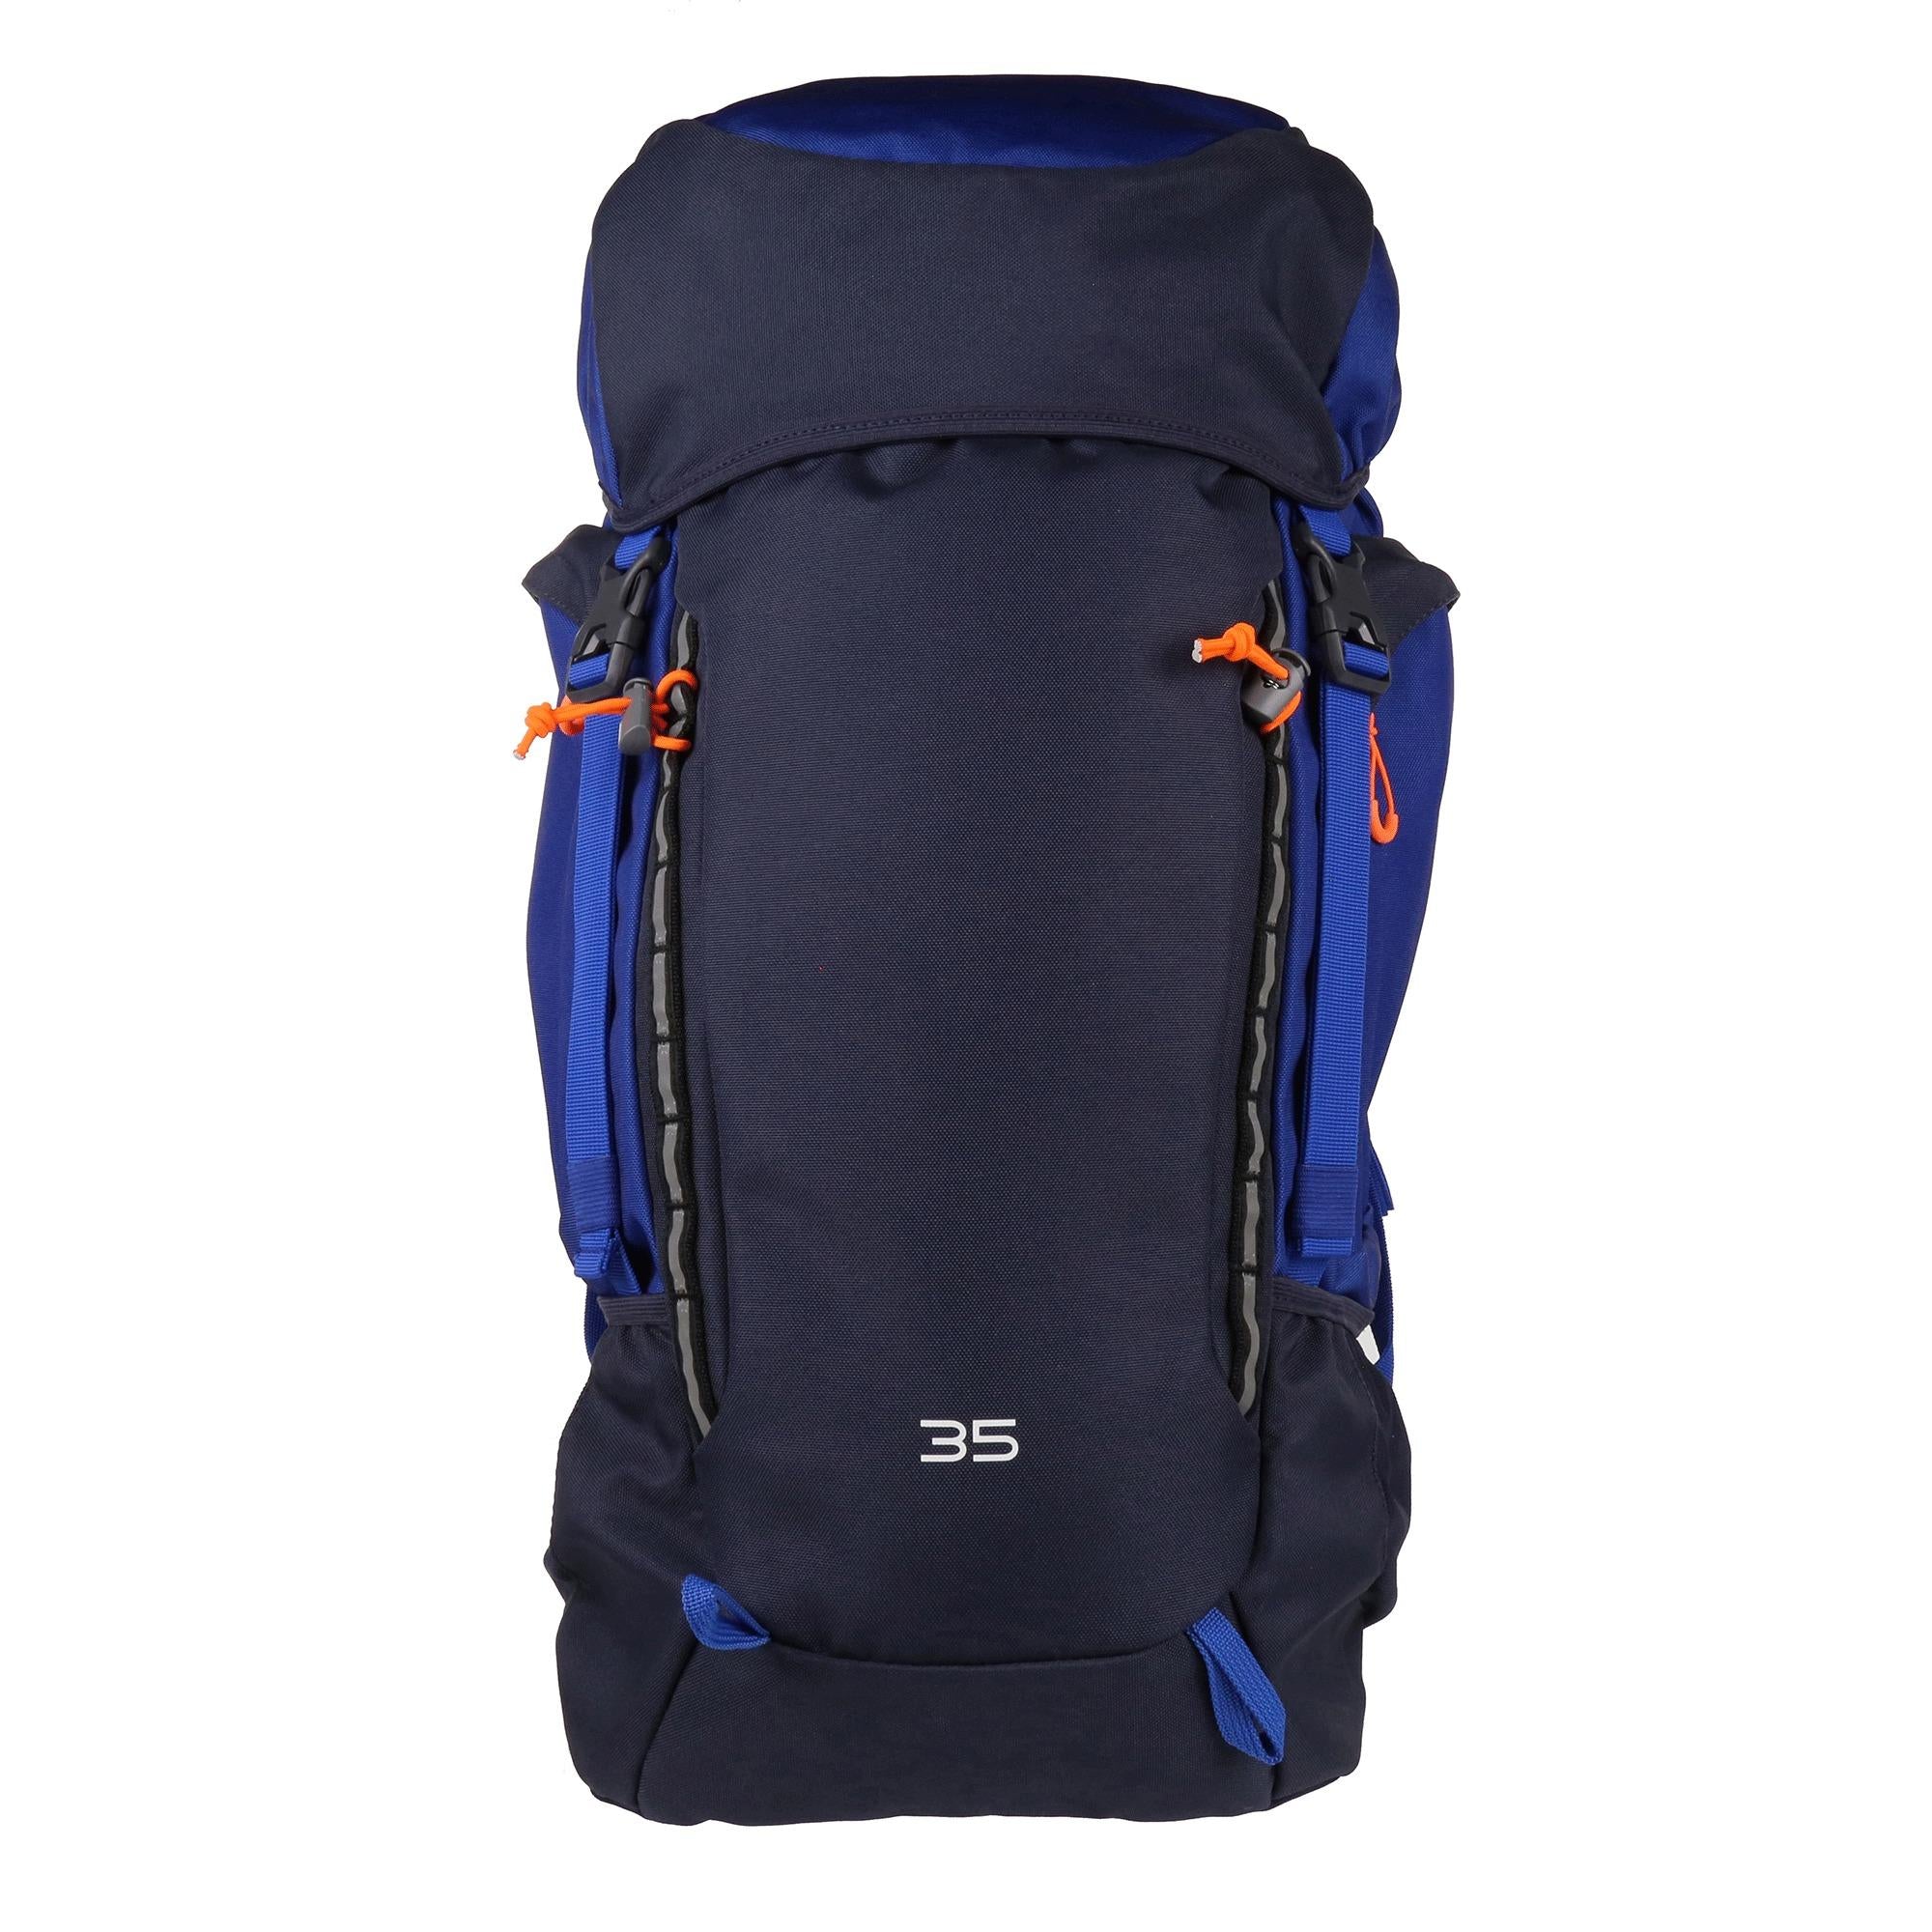 Regatta Ridgetrek navy 35-litre tool backpack perfect for carrying tools#TRB102